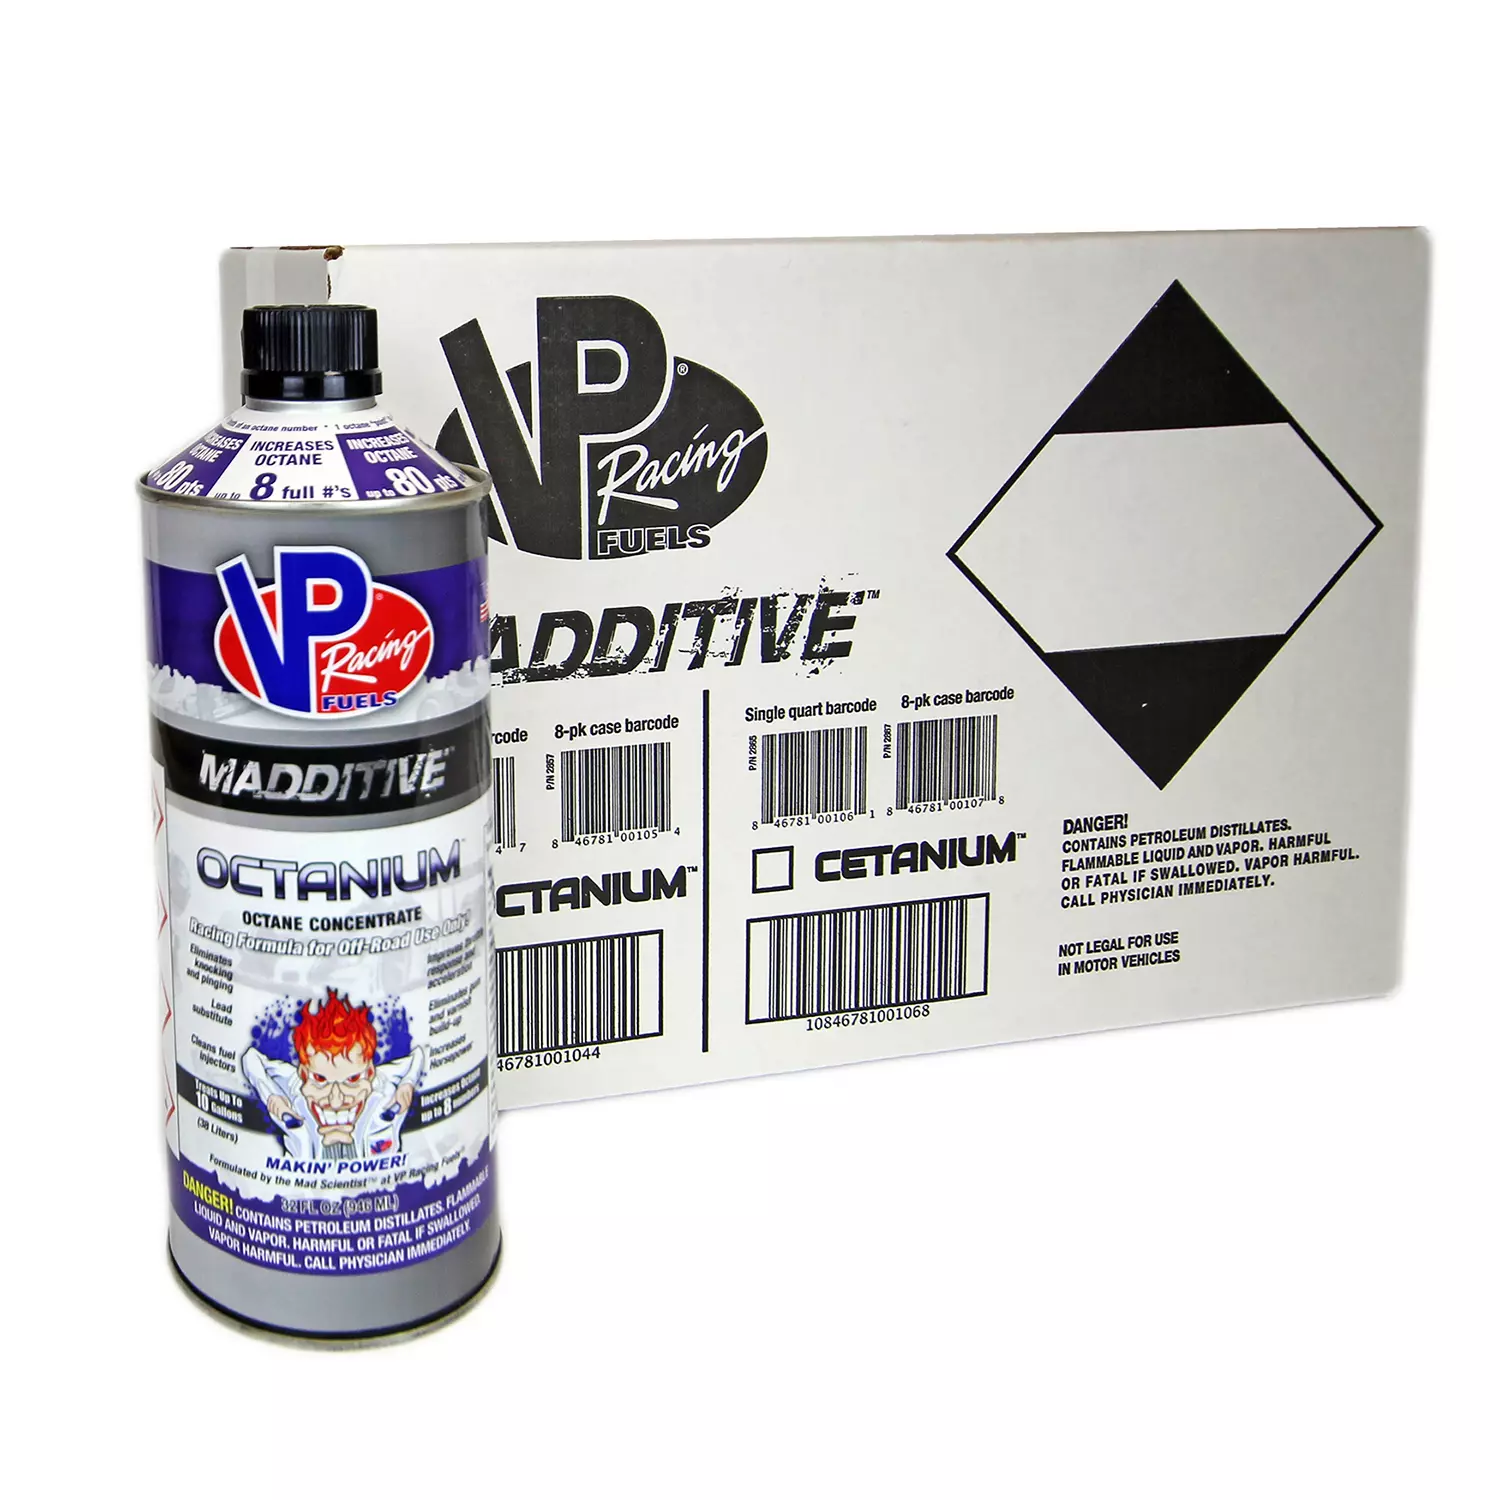 VP Racing Maddative Octanium Octane Concentrate (8-pack/32oz bottles)